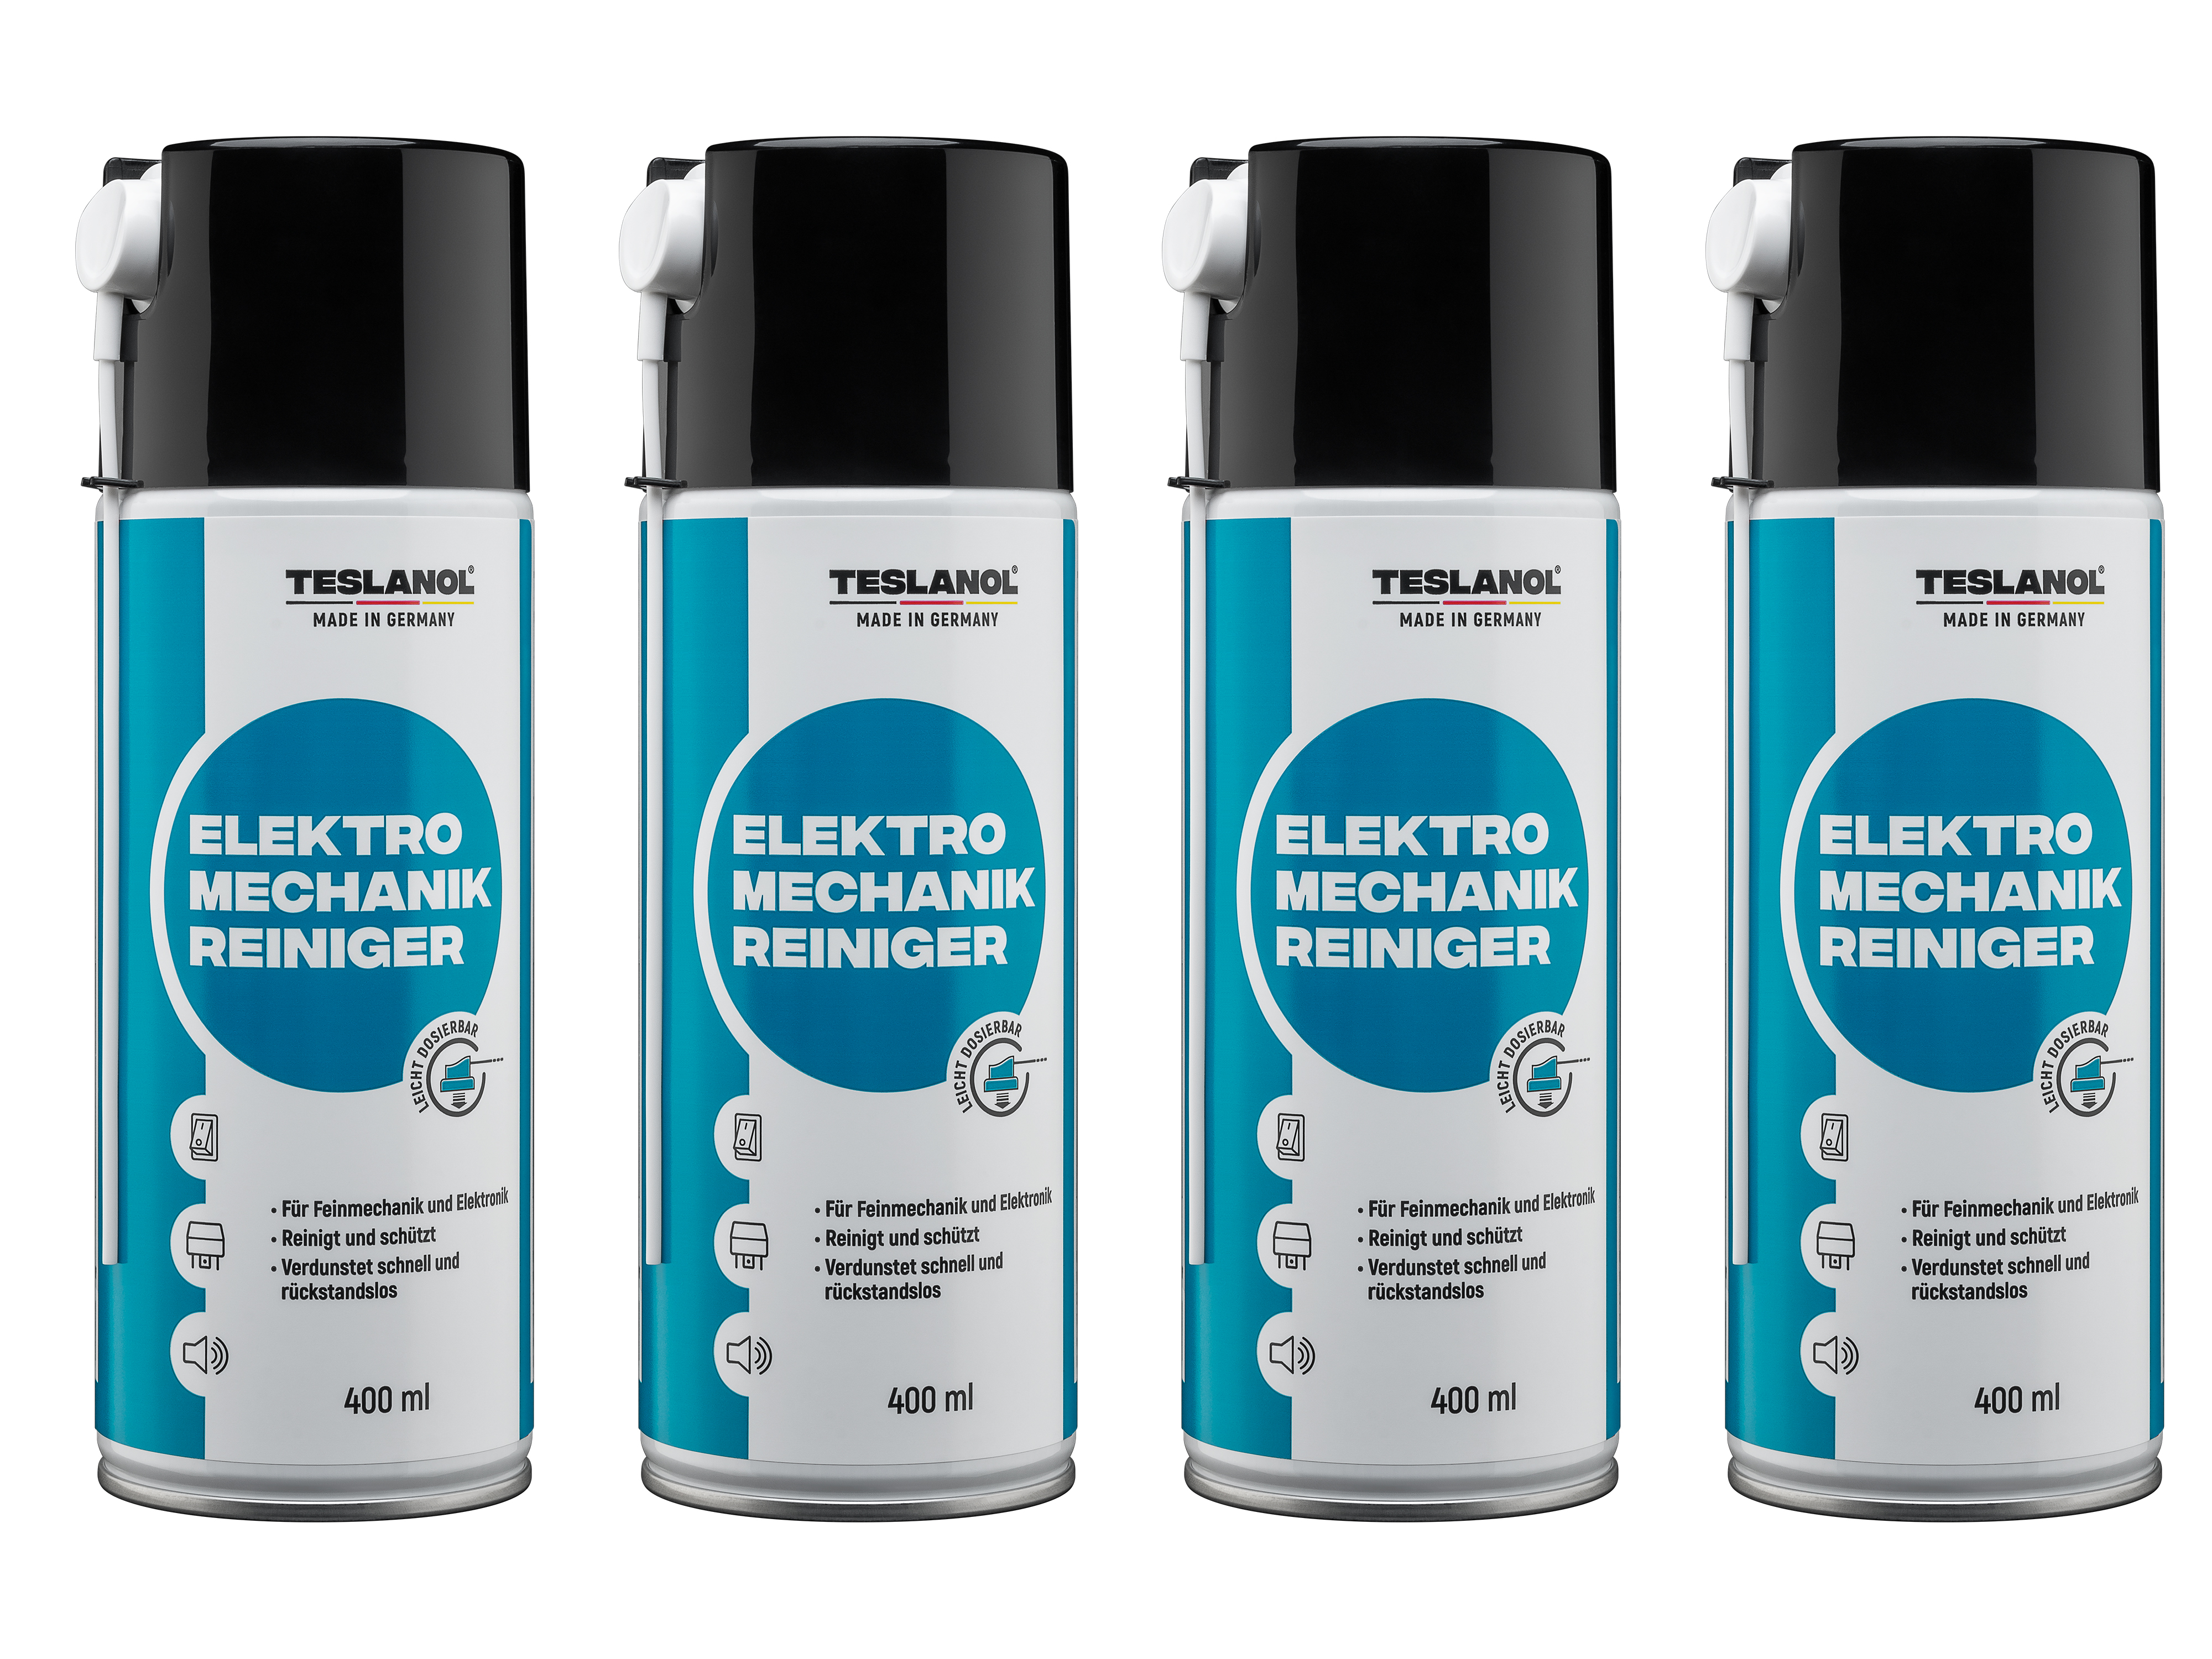 TESLANOL 26018 Elektro-Mechanik-Reinigerspray, 400 ml, 4 Stück